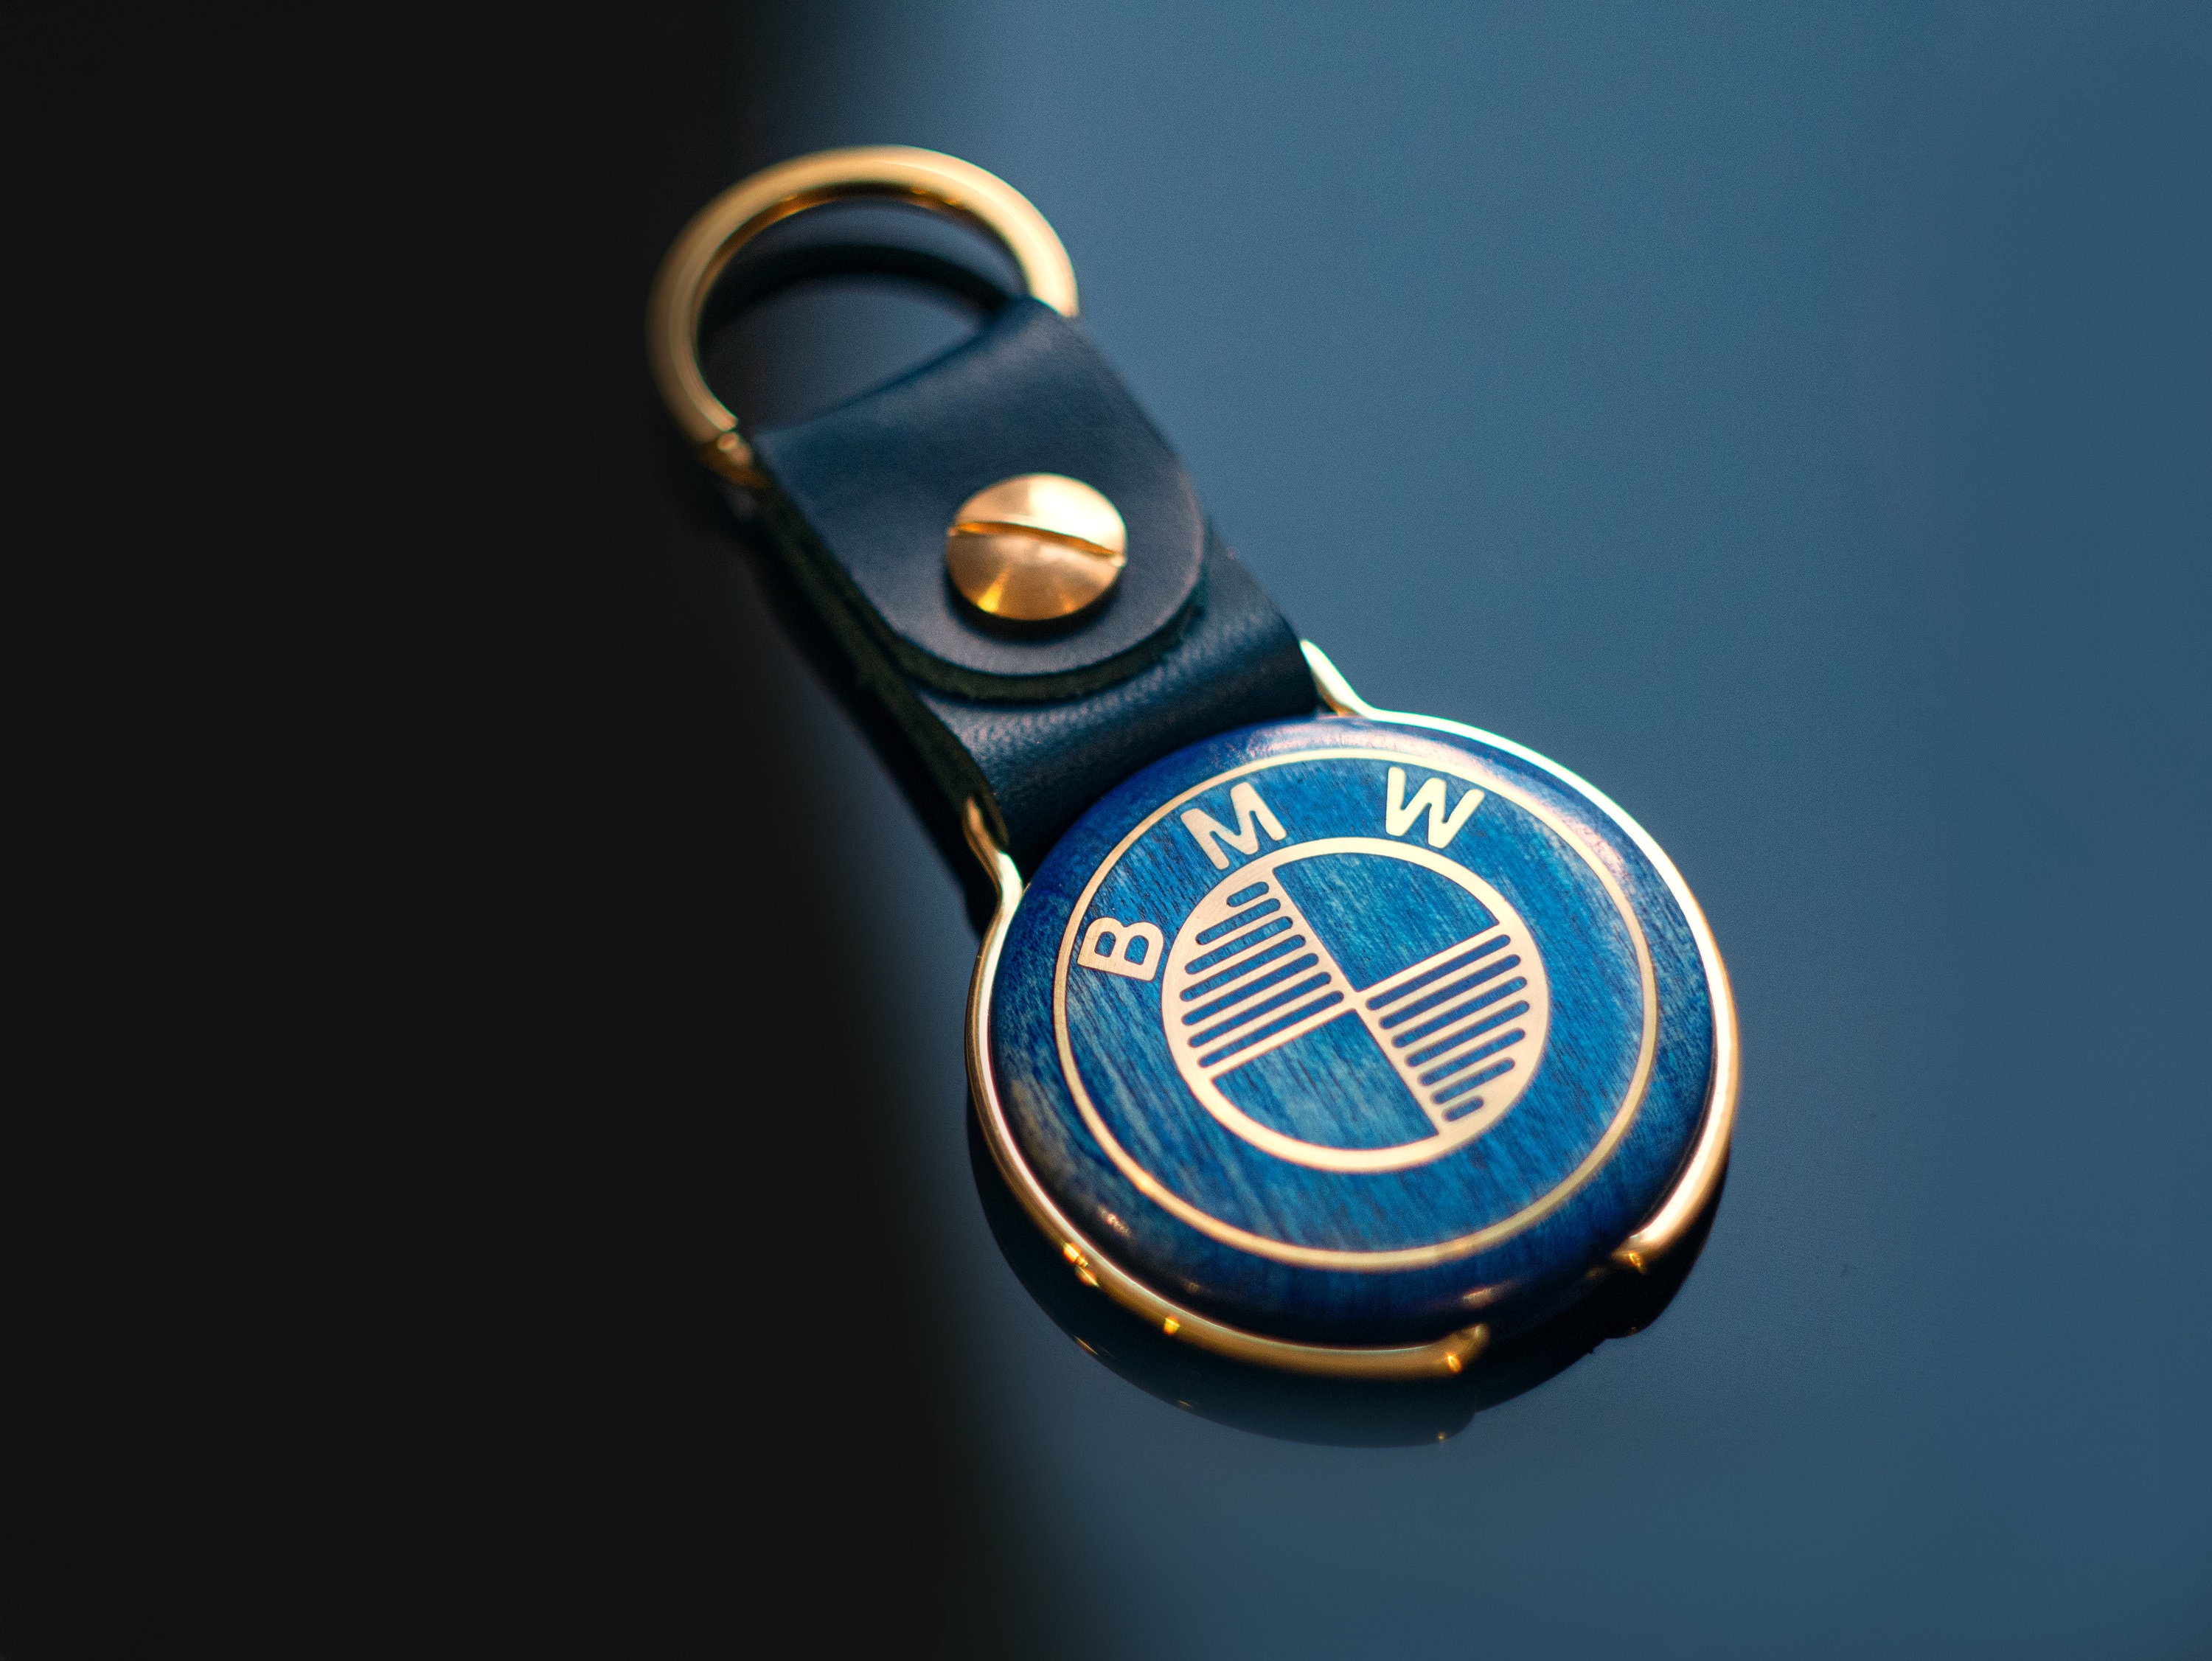 R/A women cute keychains accessories lanyard wristlet strap,Suitable for  car BMW 1 3 5 7 Series F30 F35 320li 316i X1 X3 X4 X5 X6 cover keychain